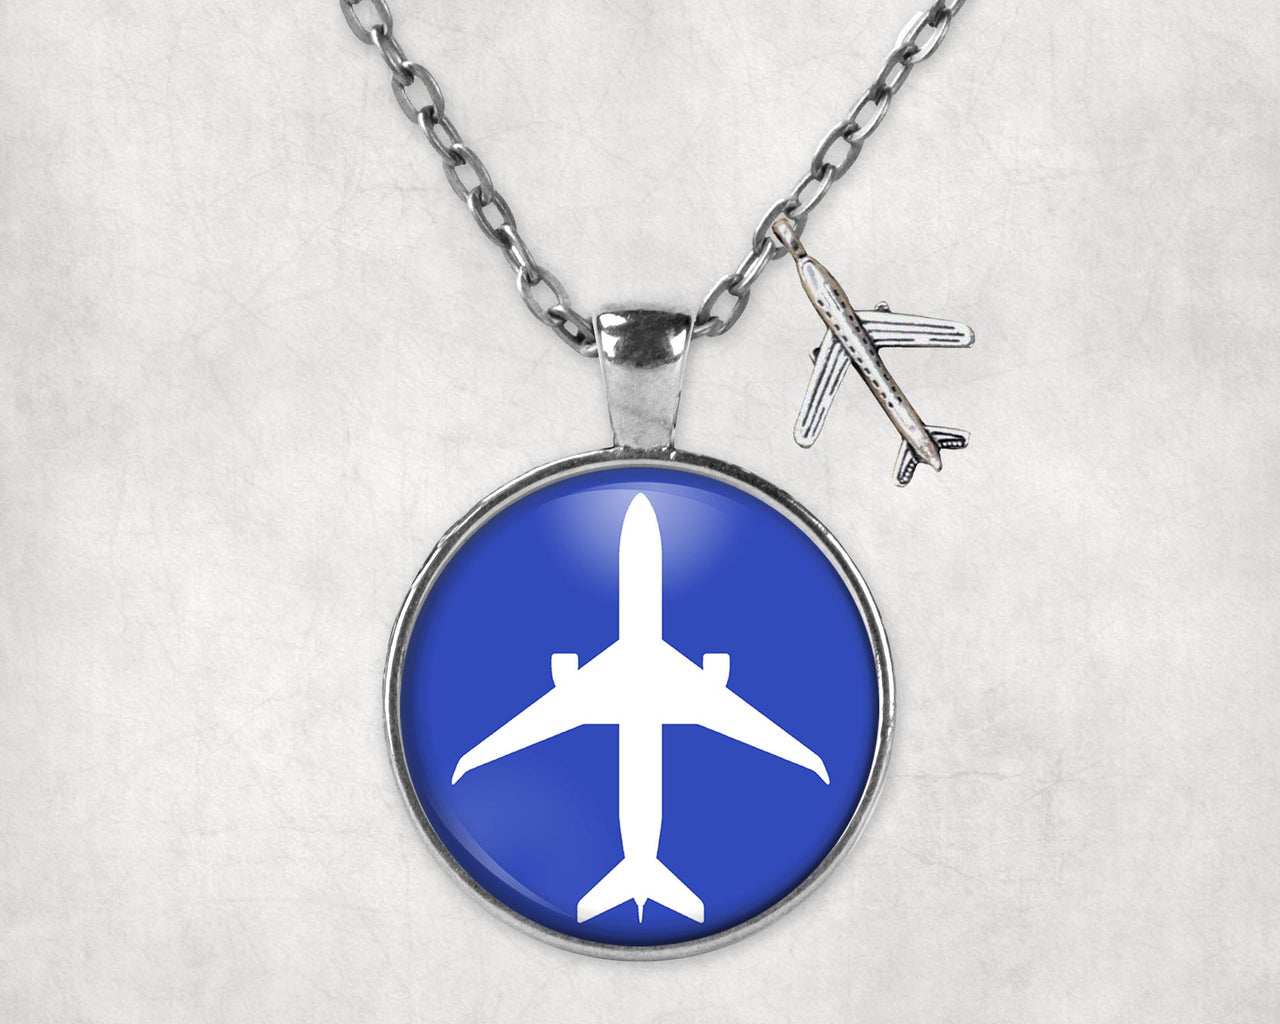 Airplane & Circle Designed Necklaces